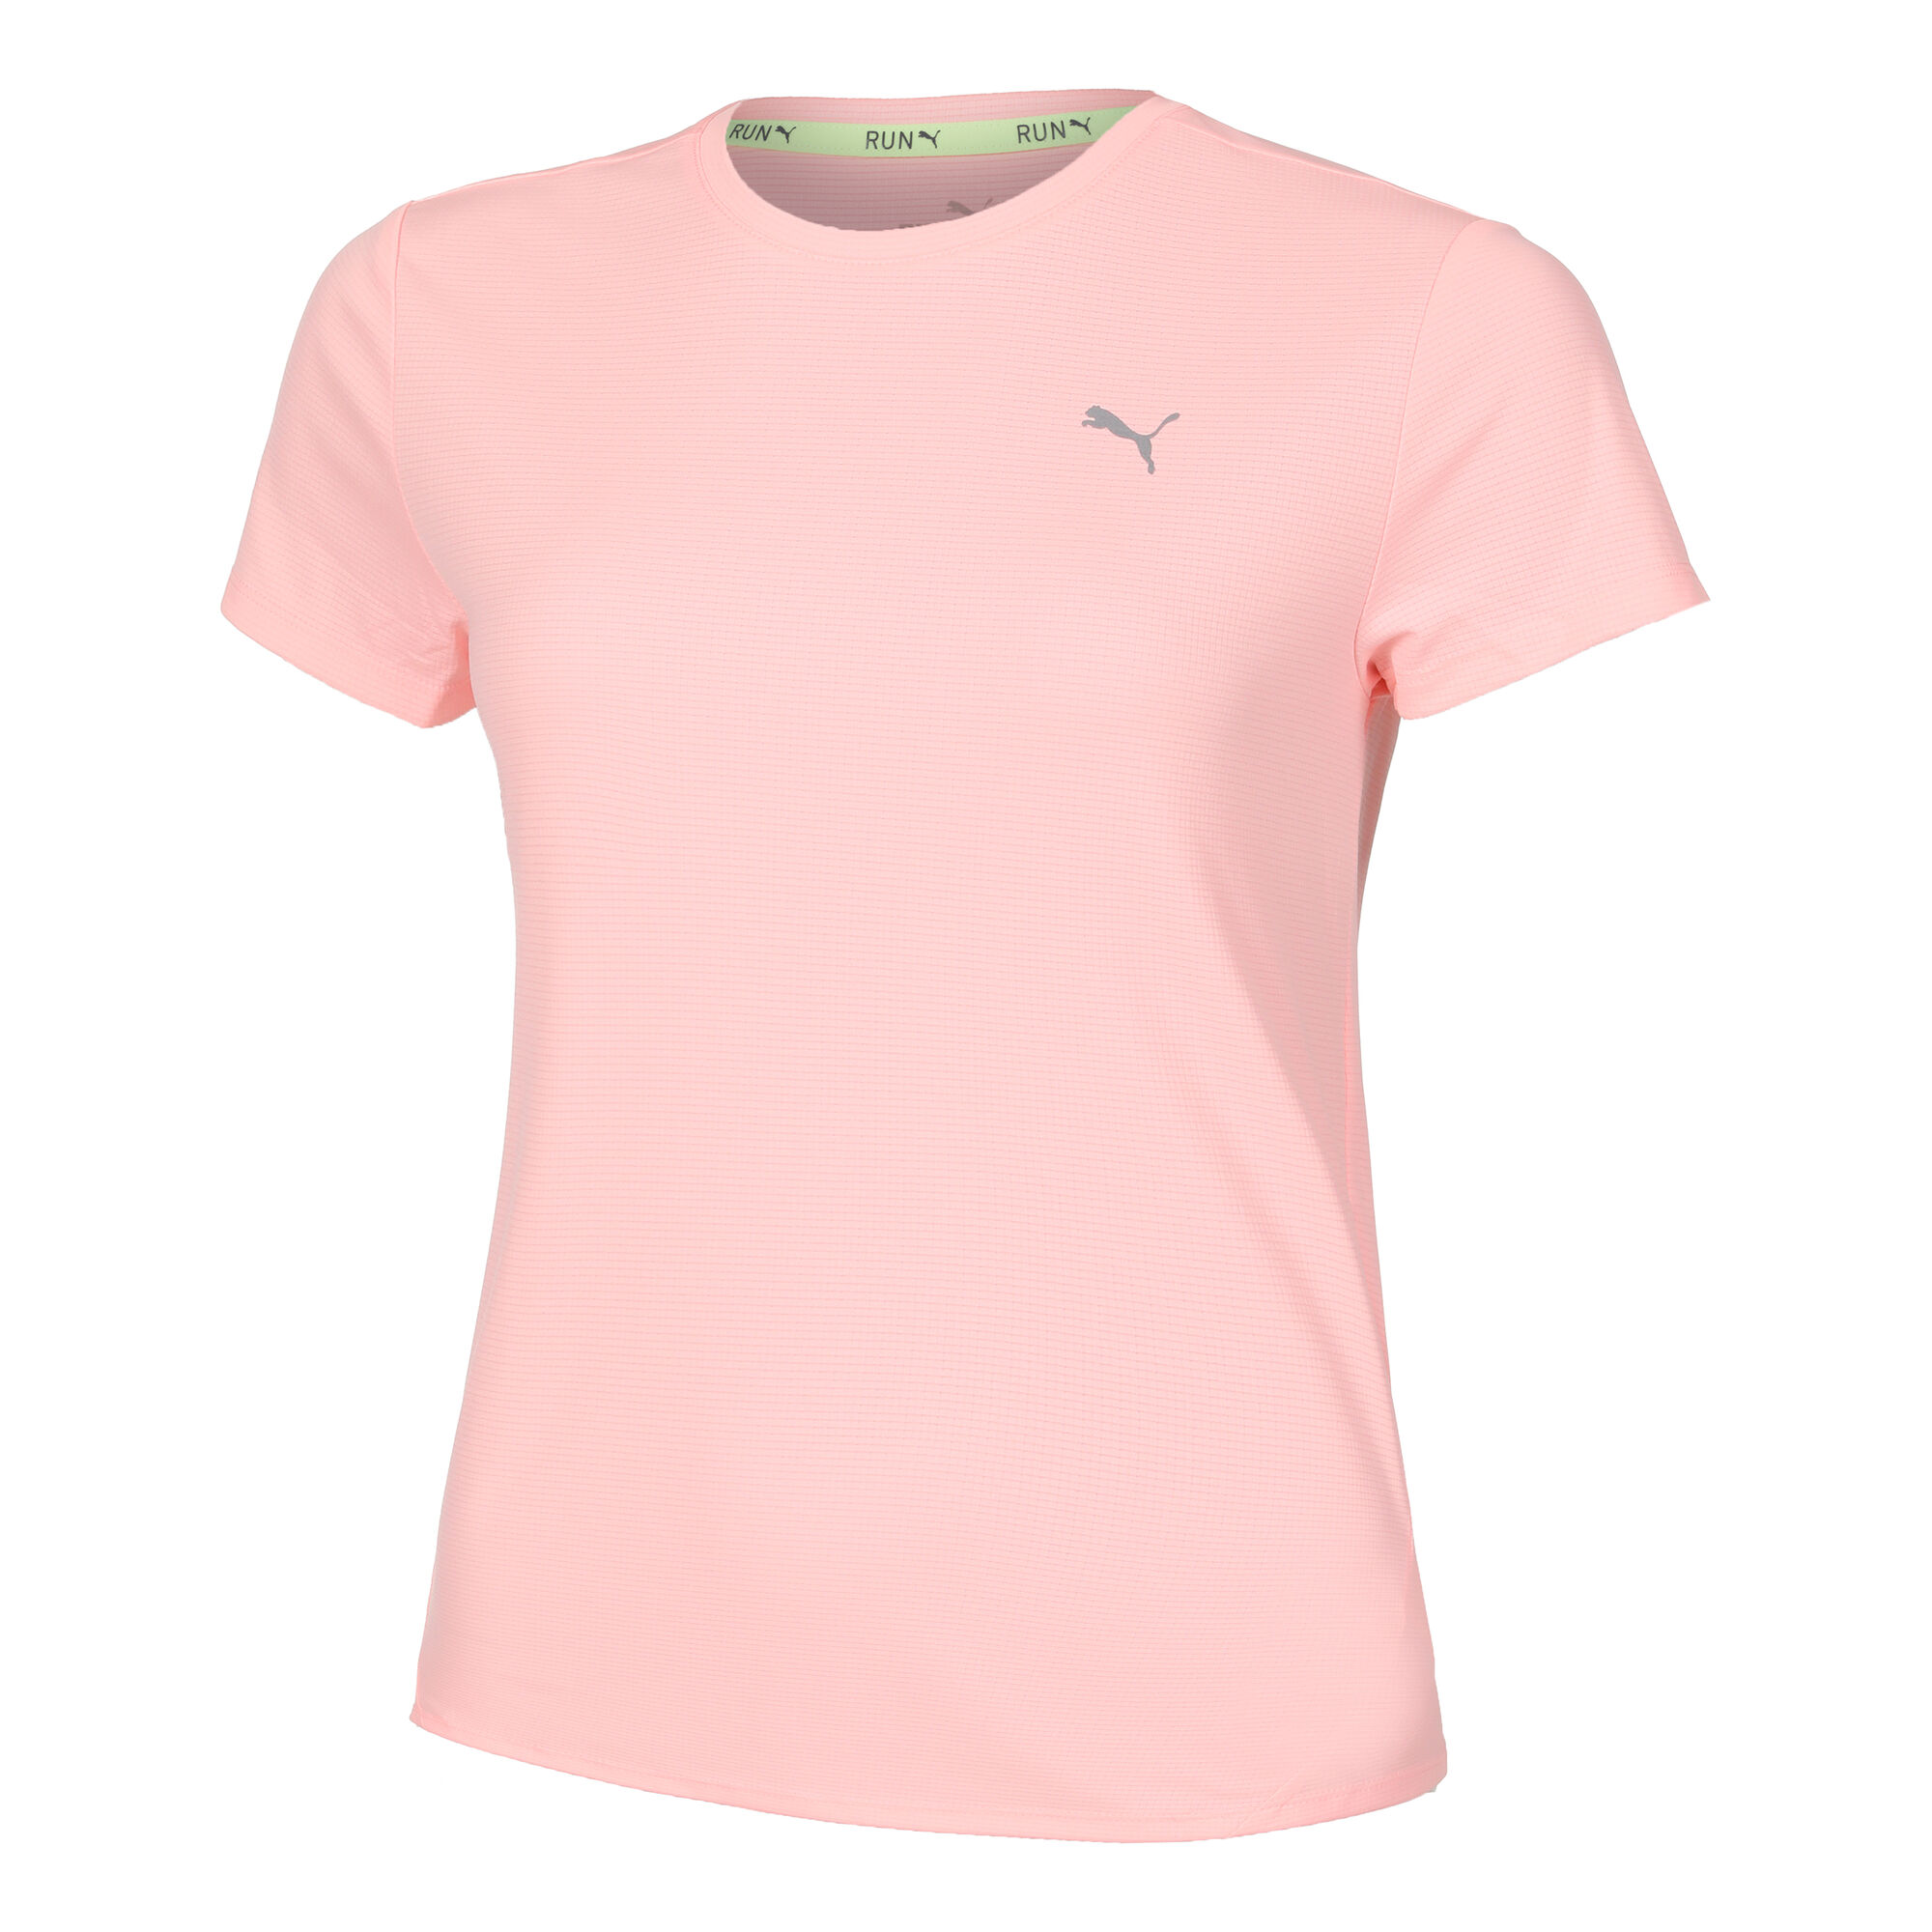 Buy Puma | Point COM Pink Favorite Running Shirts Women Run Running online